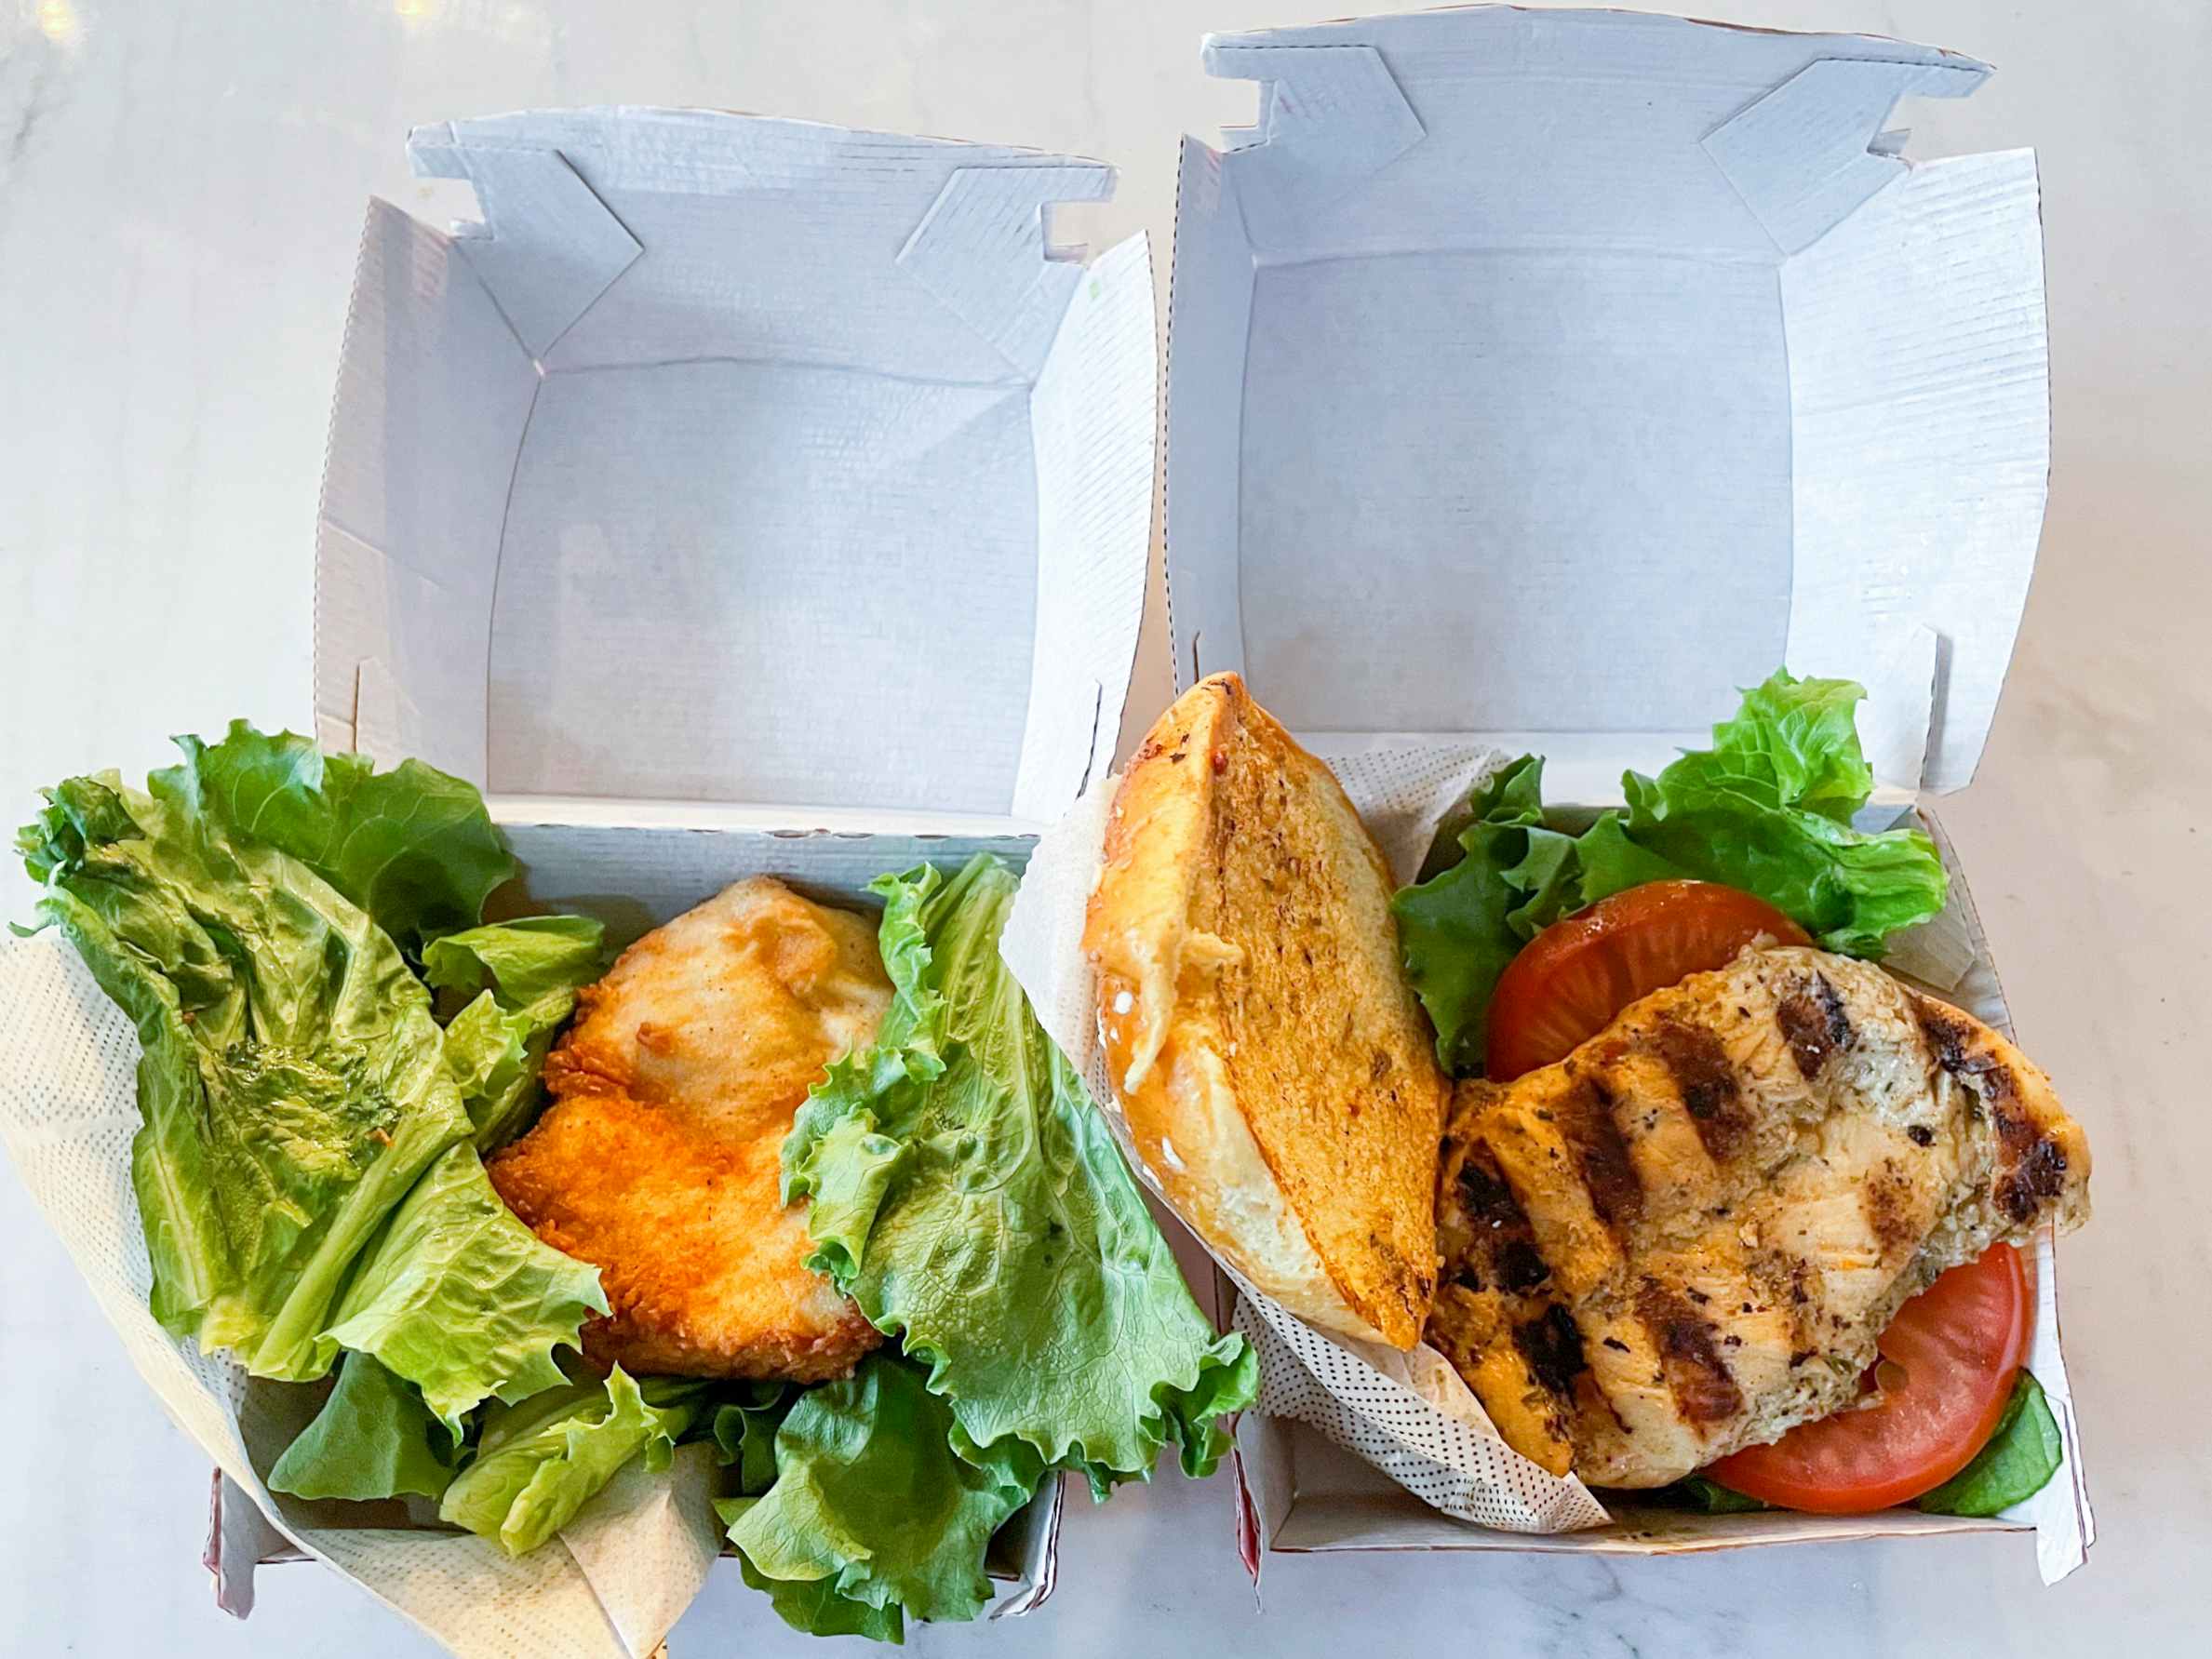 chick-fil-a-secret-menu-healthy-choices-grilled-checken-lettus-wrap-2021-13